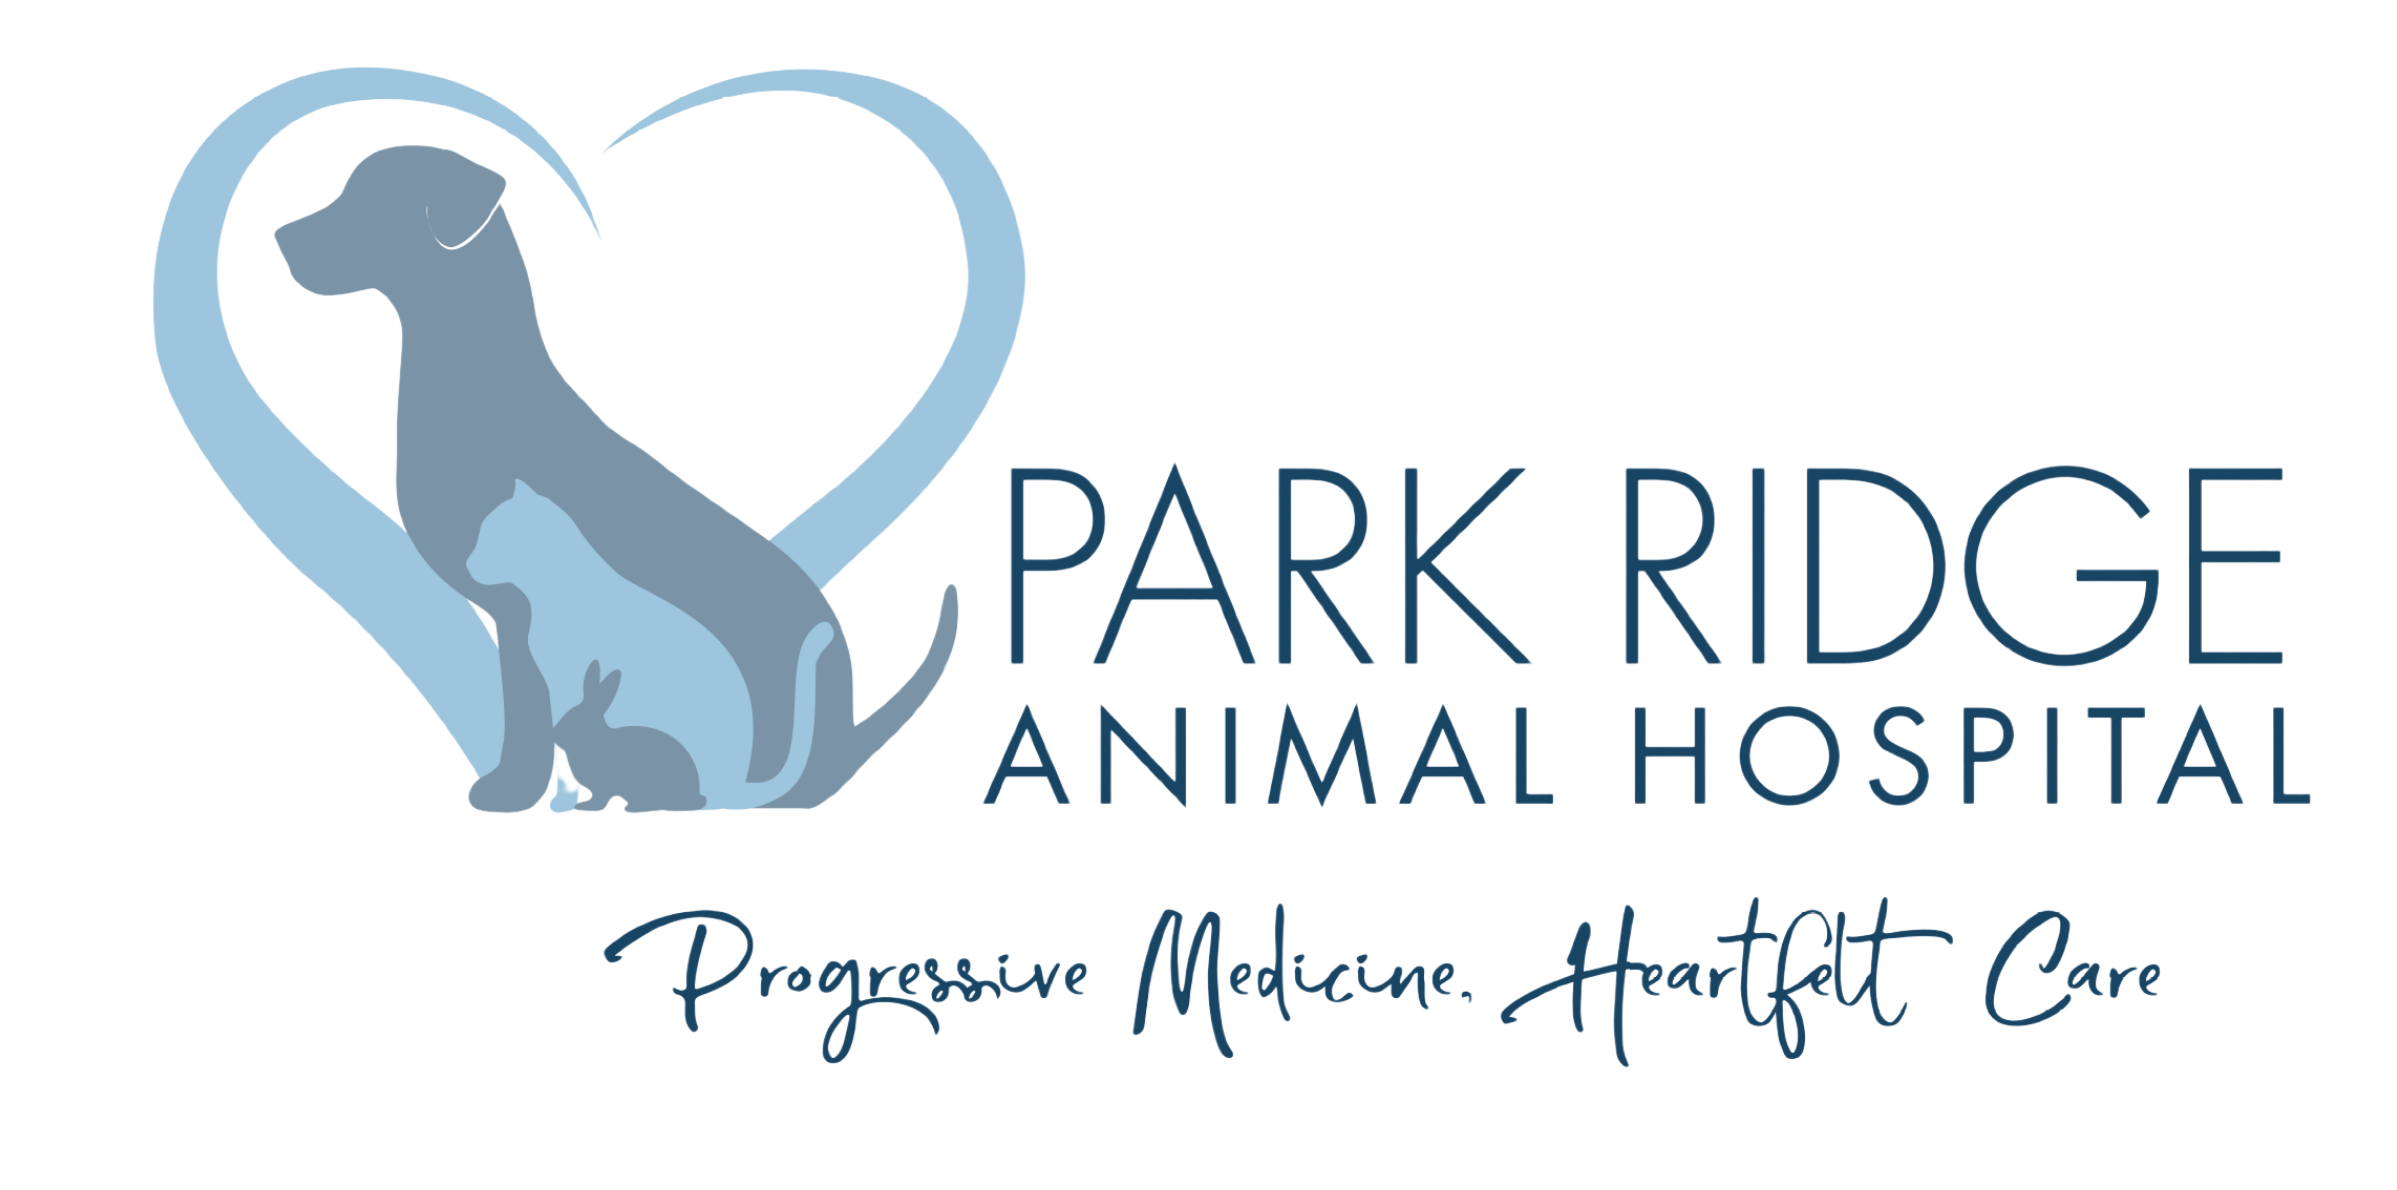 Park Ridge Animal Hospital